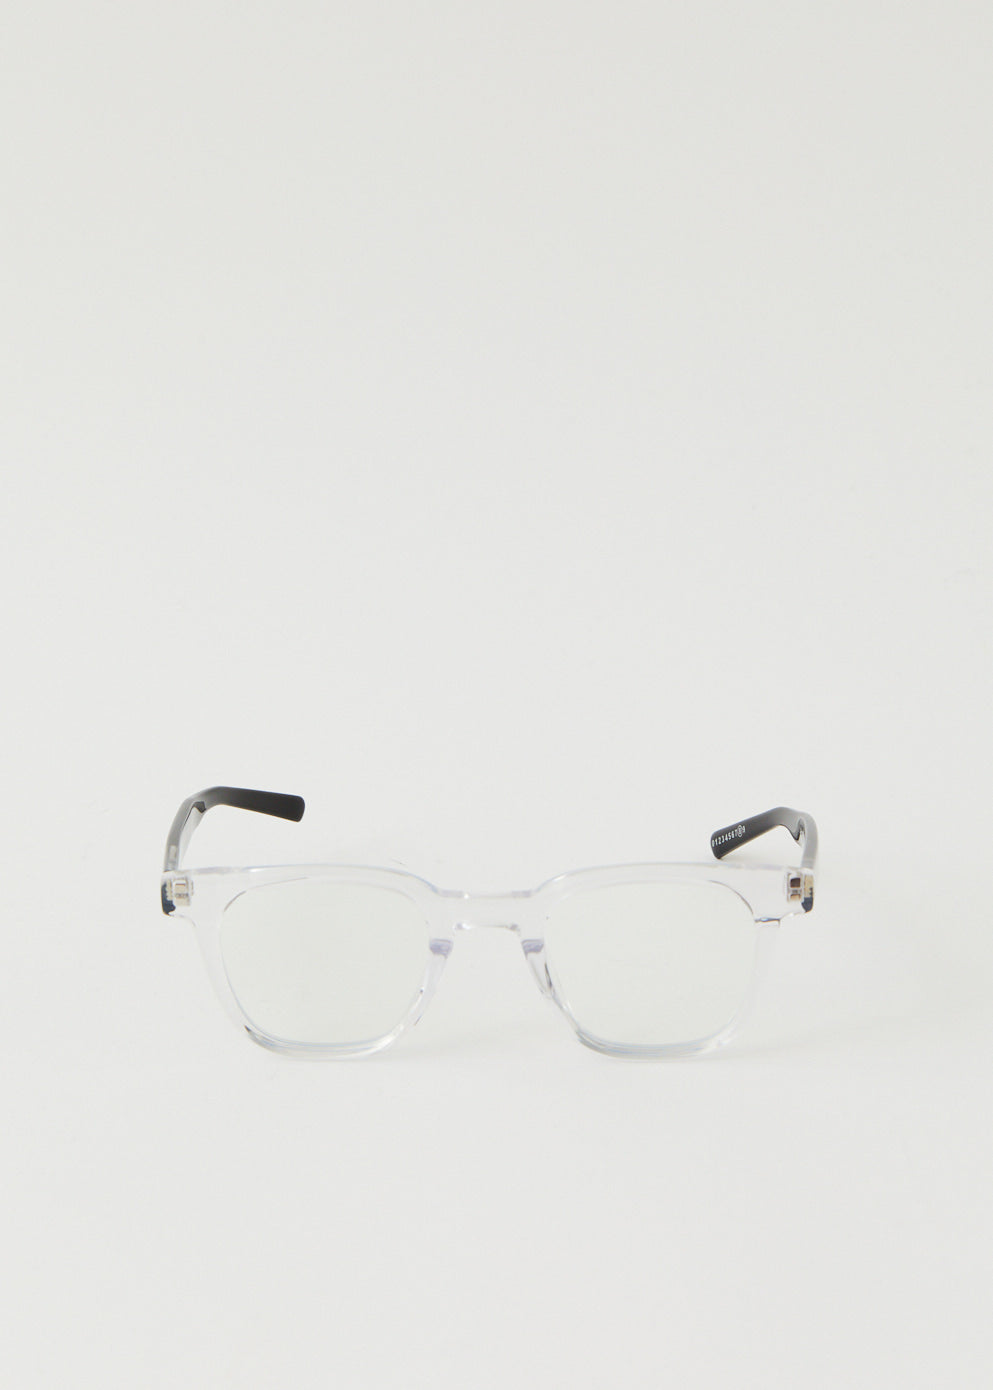 x Maison Margiela MM010-C1 Glasses